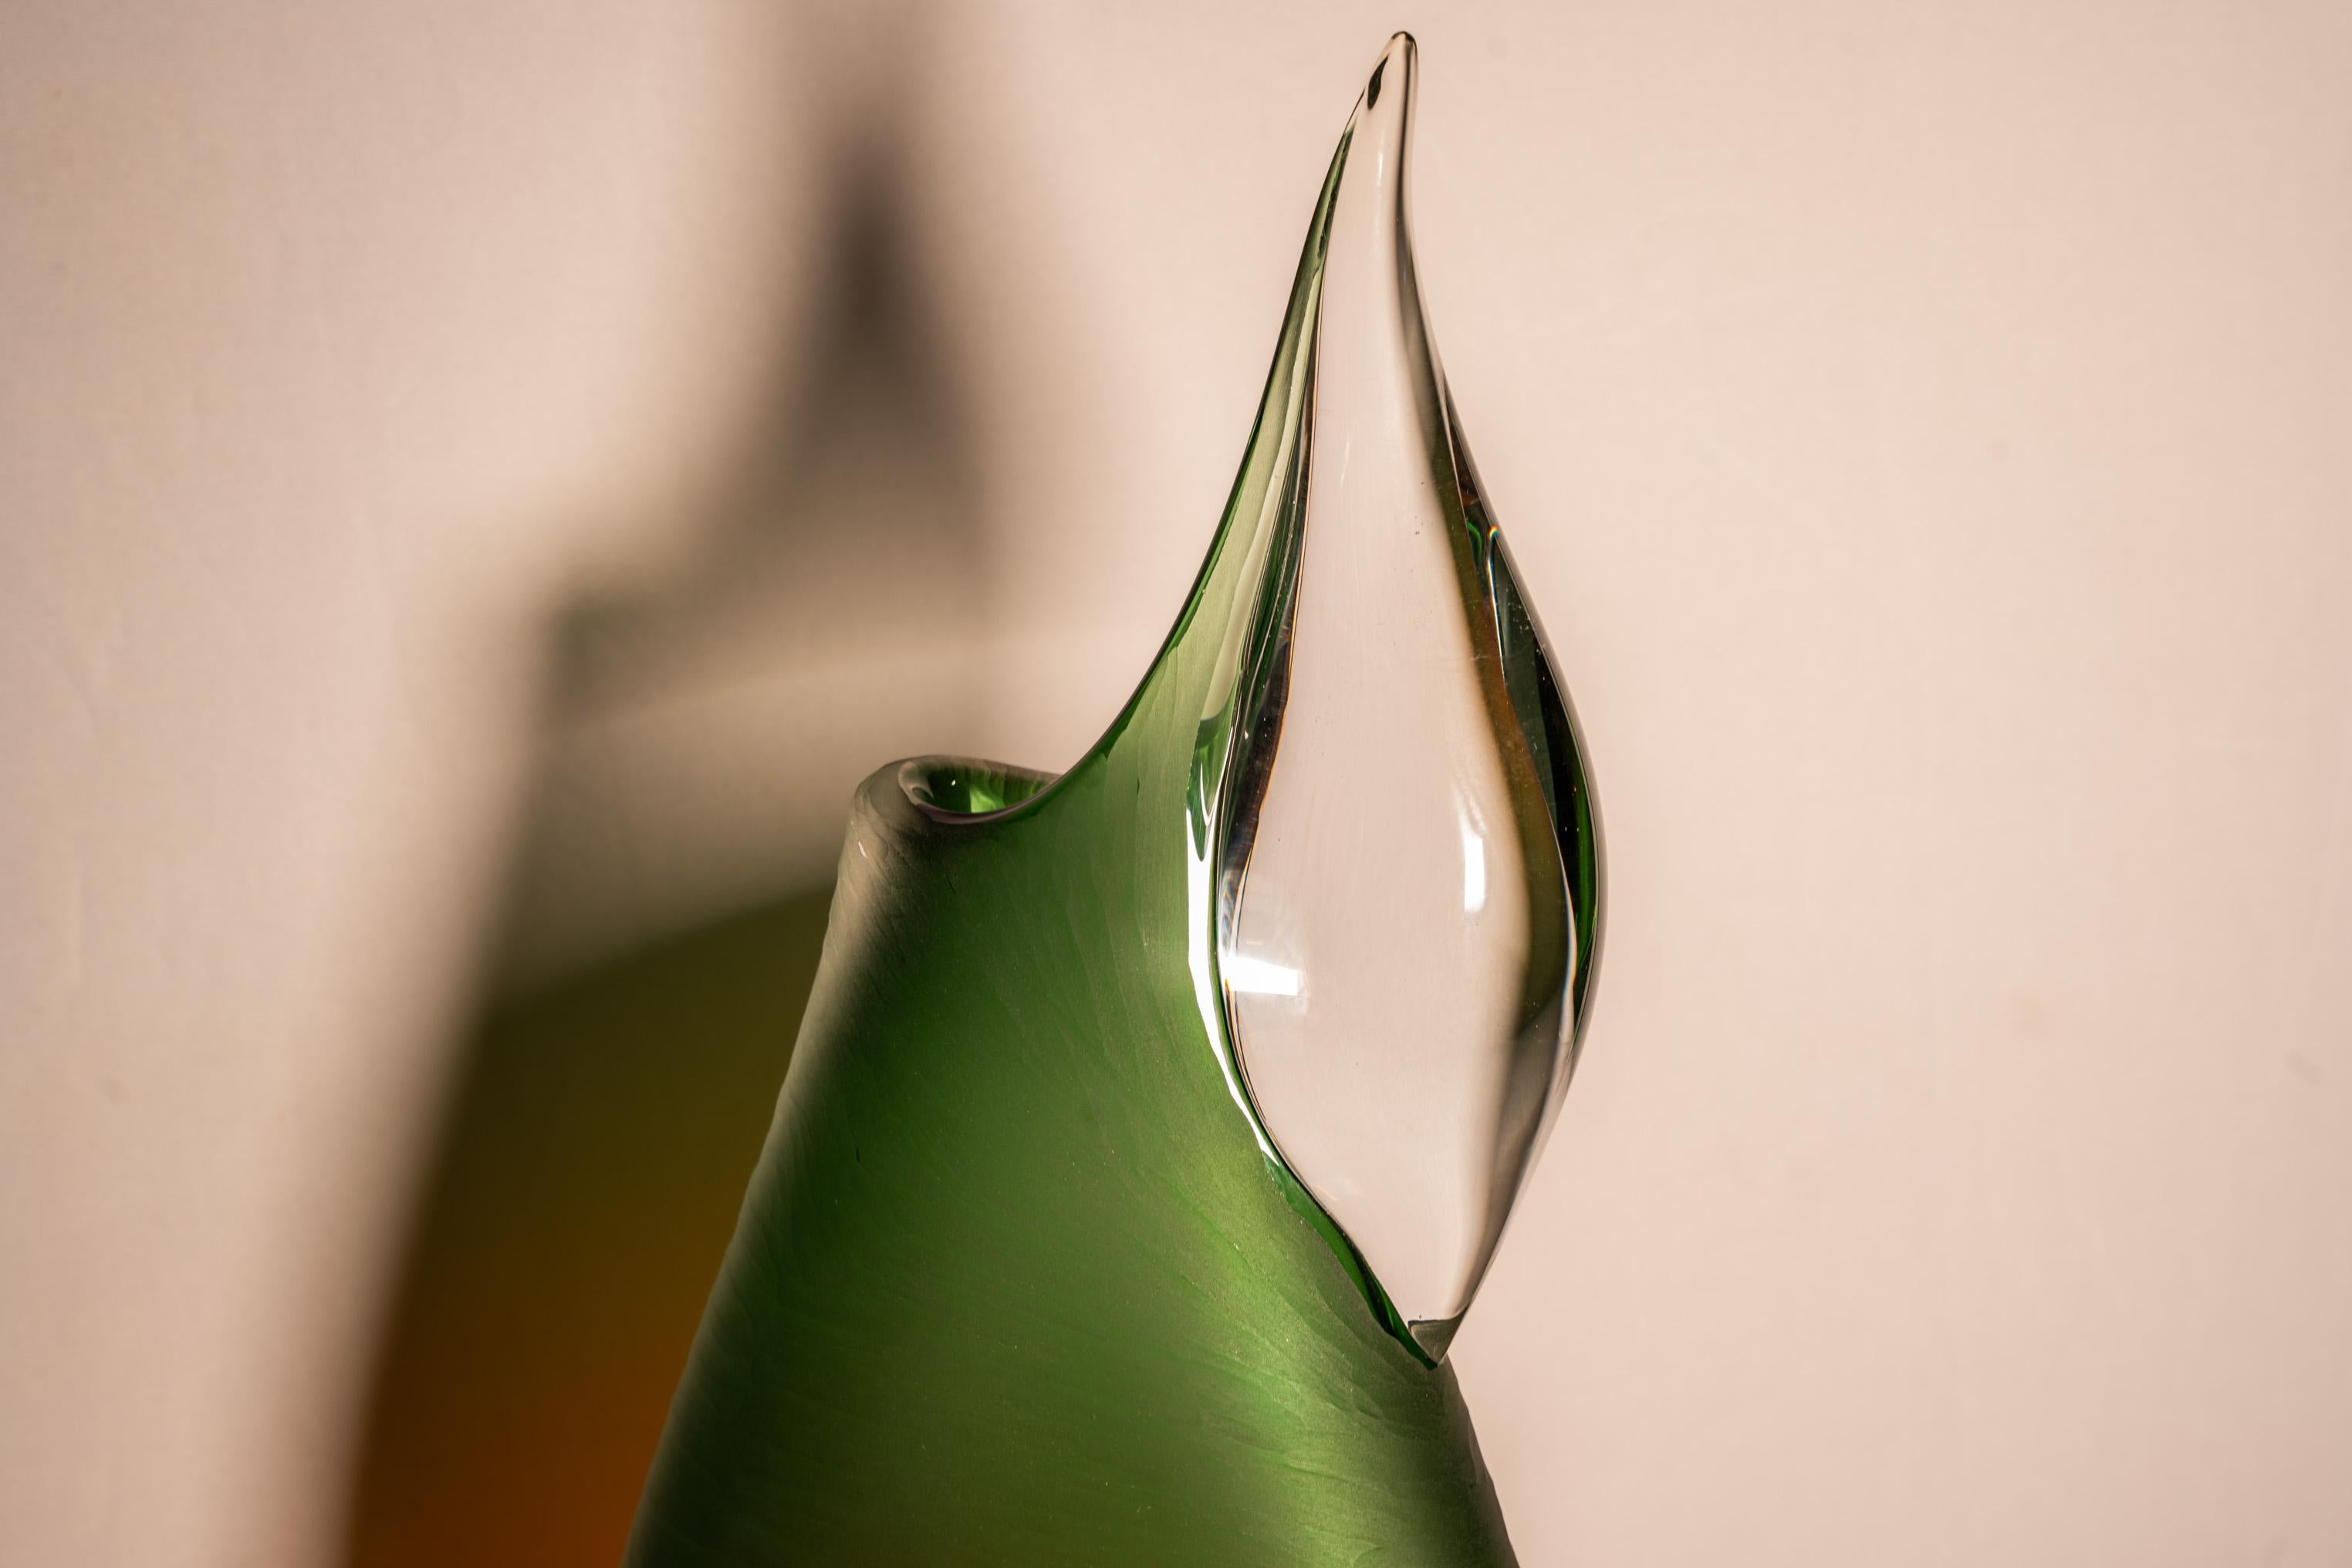 Grande vaso in vetro verde e arancione, con appendice trasparente realizzata con tecnica ad incalmo 
Geschaffen und hergestellt von Paolo Crepax in Murano (Venedig) in den ersten Jahren des Jahres 2000 